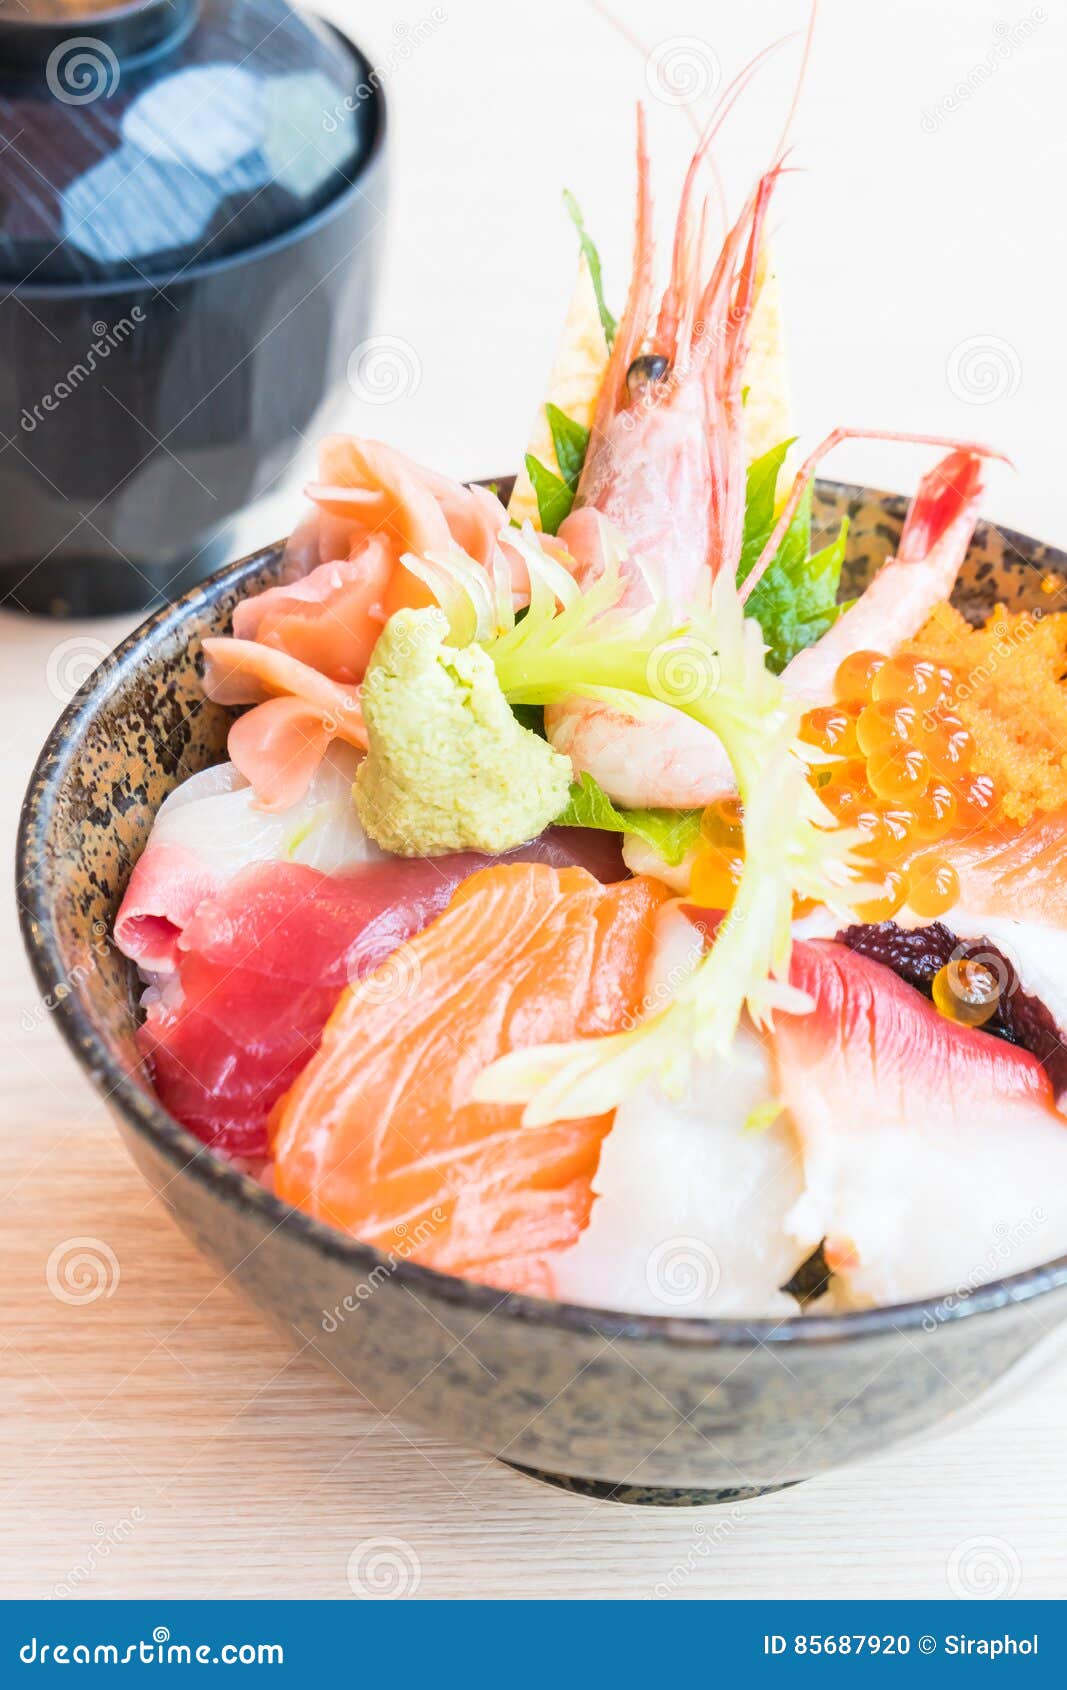 Japanese Rice Bowl with Sashimi Seafood on Top Stock Photo - Image of